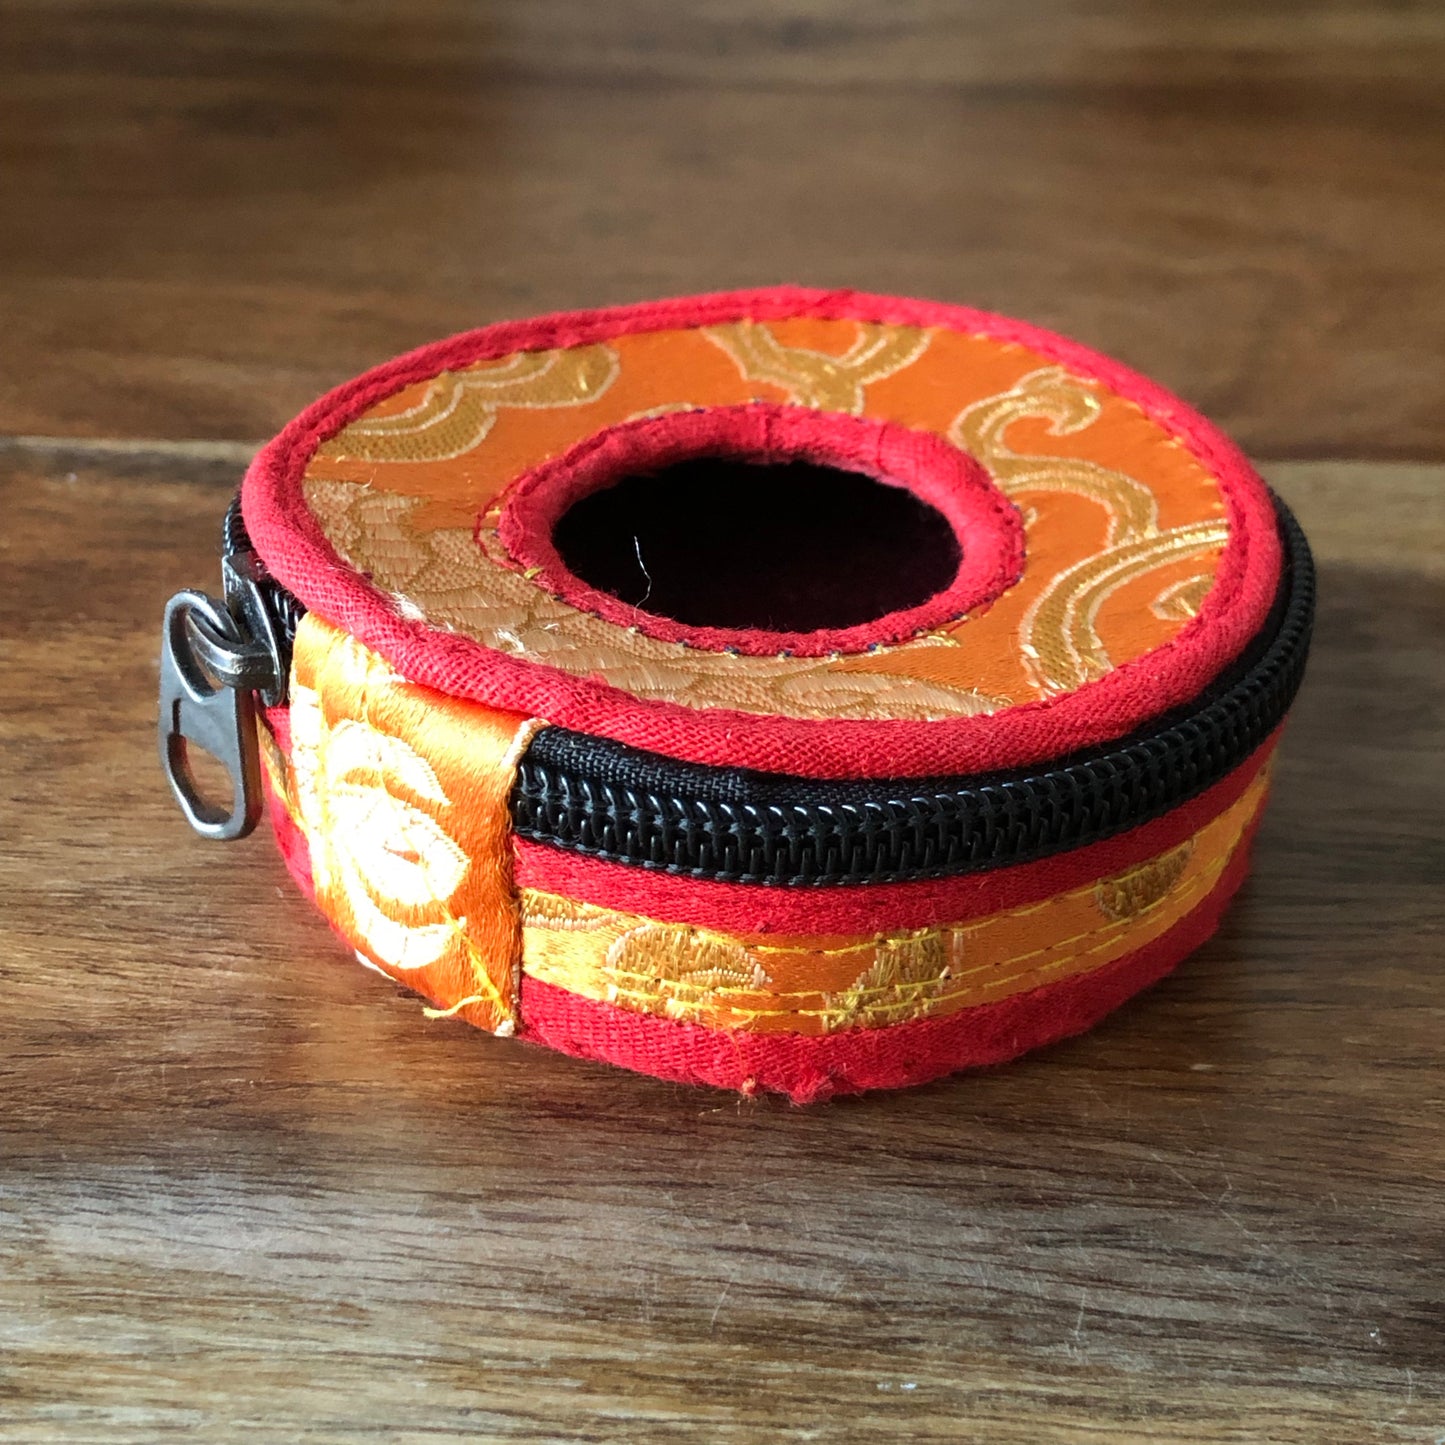 Tingsha case orange/red 7.5 cm